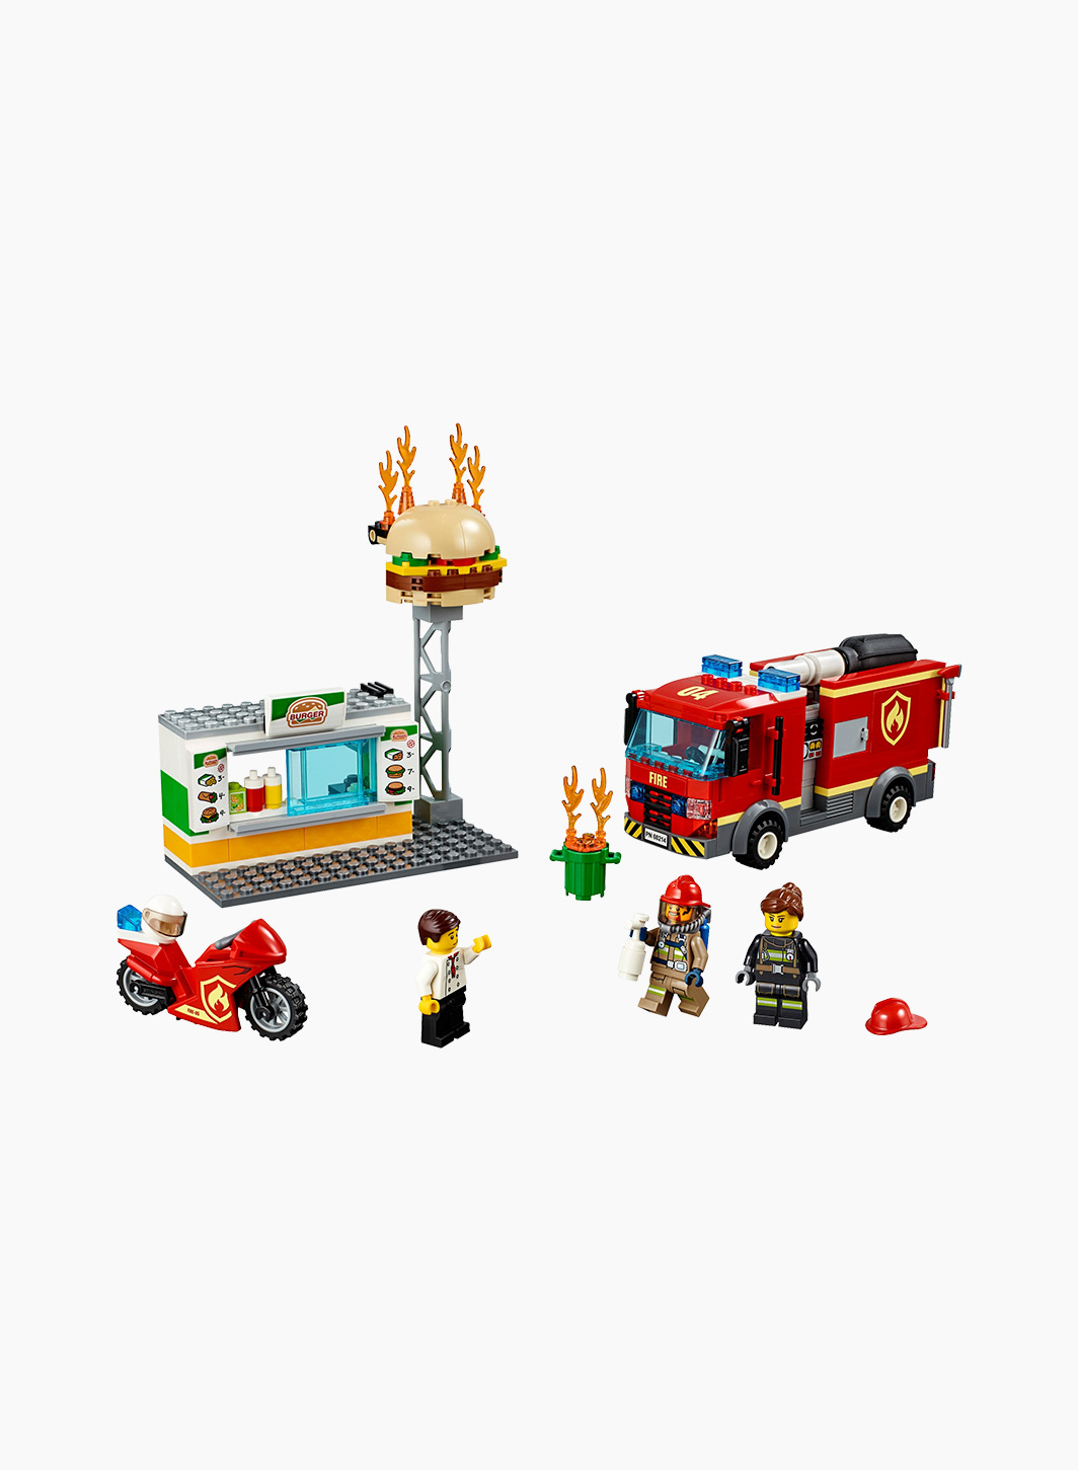 Lego City Constructor Burger Bar Fire Rescue